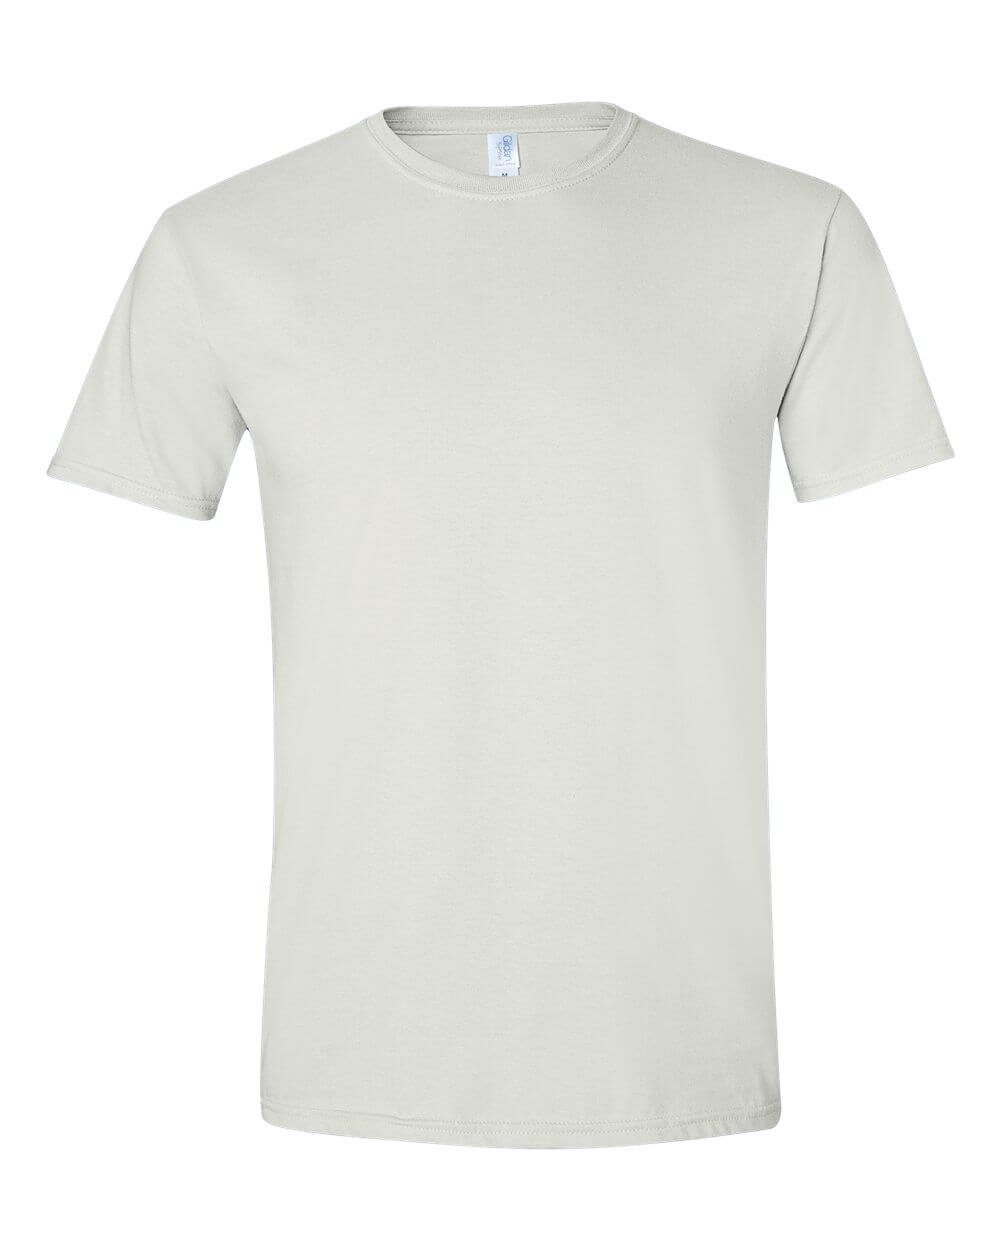 Camiseta algodón para hombre blanca marca Gildan